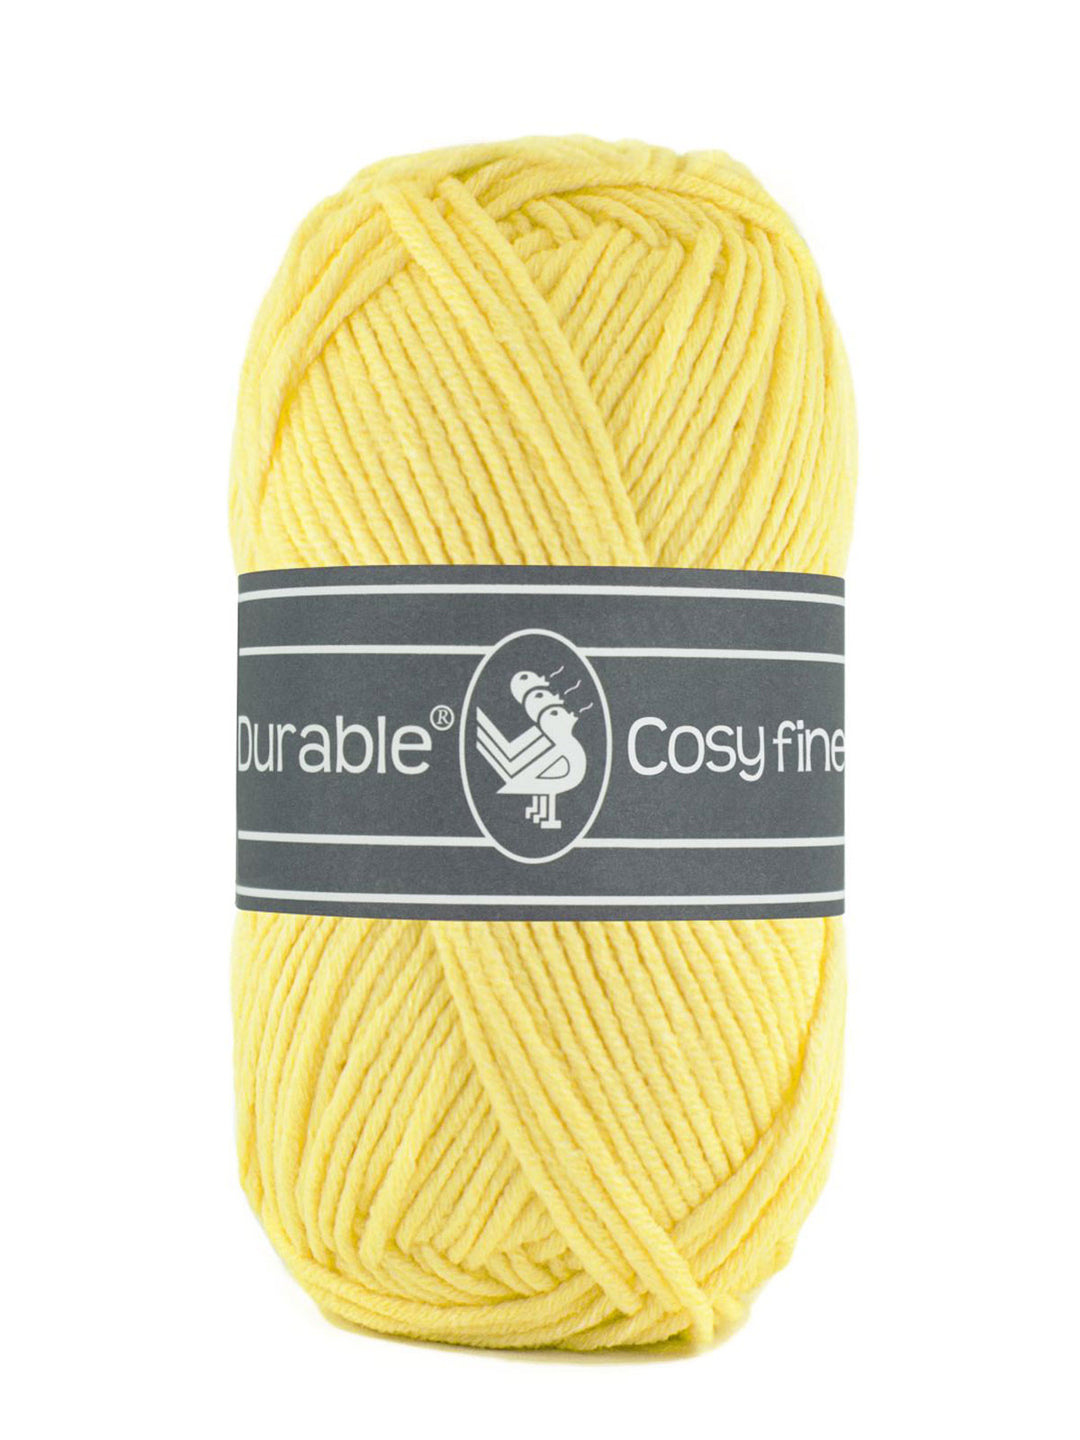 Durable Cosy Fine 309 Light yellow